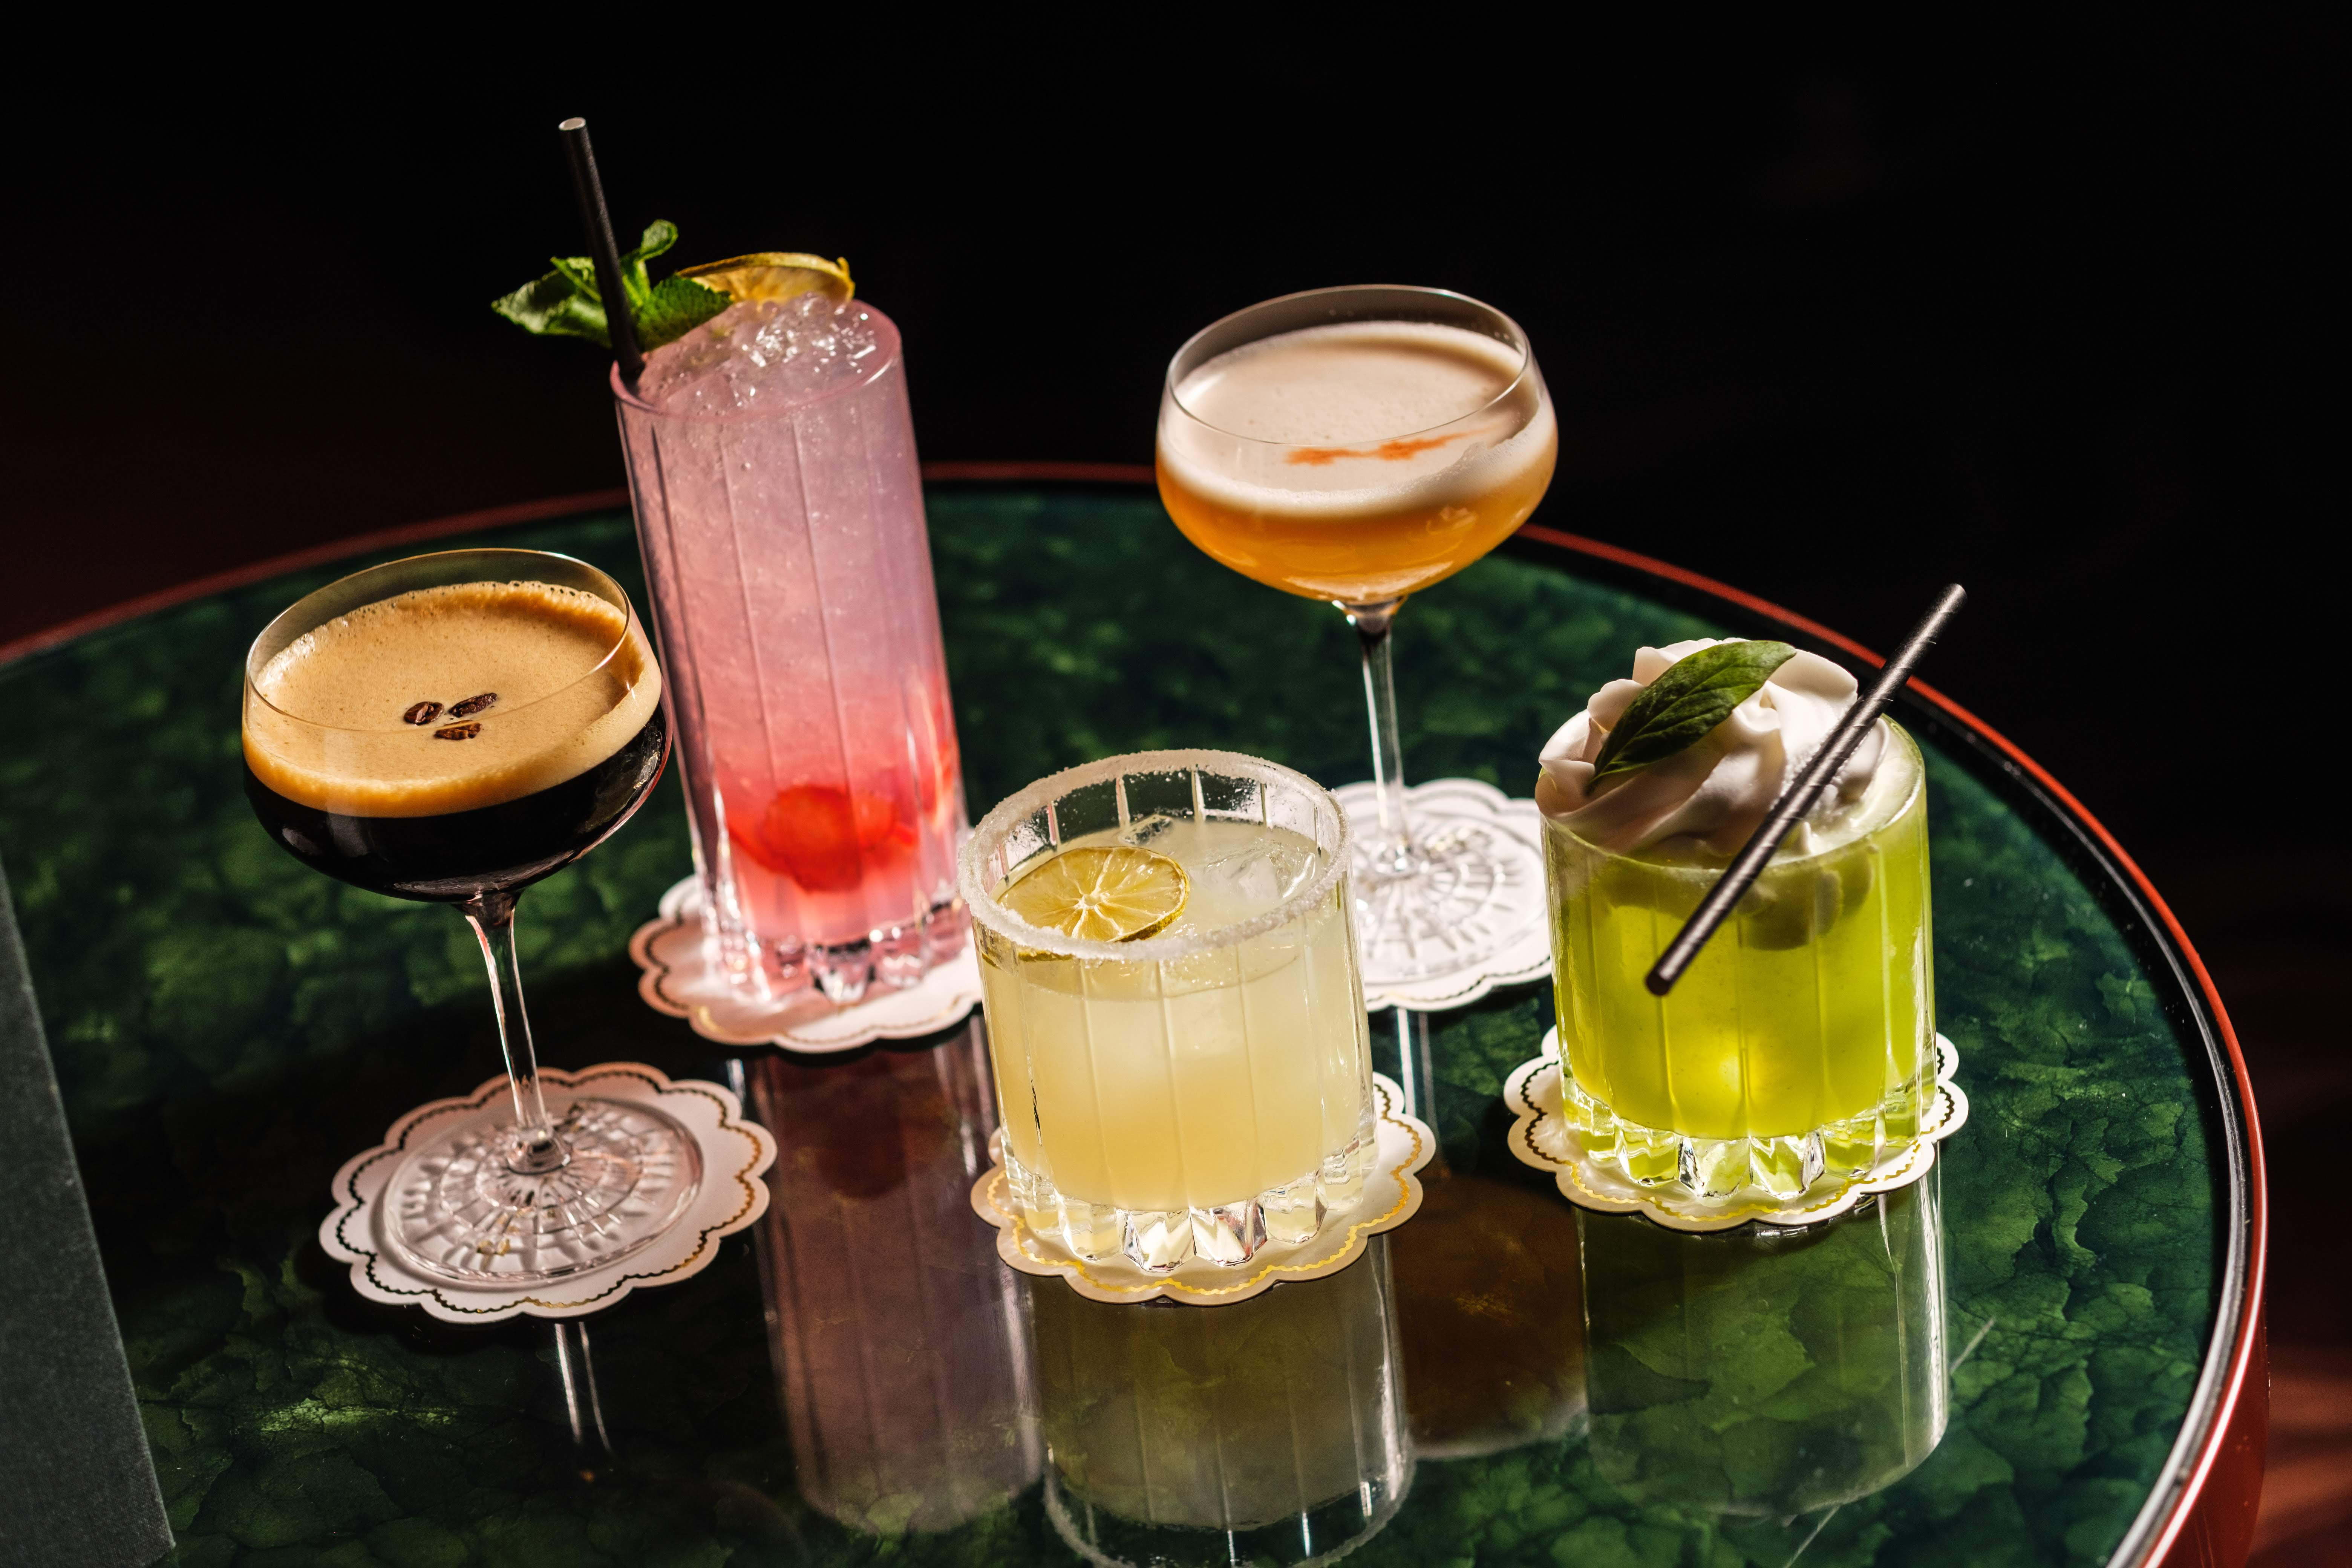 Bardot Social Club – Cocktail bars